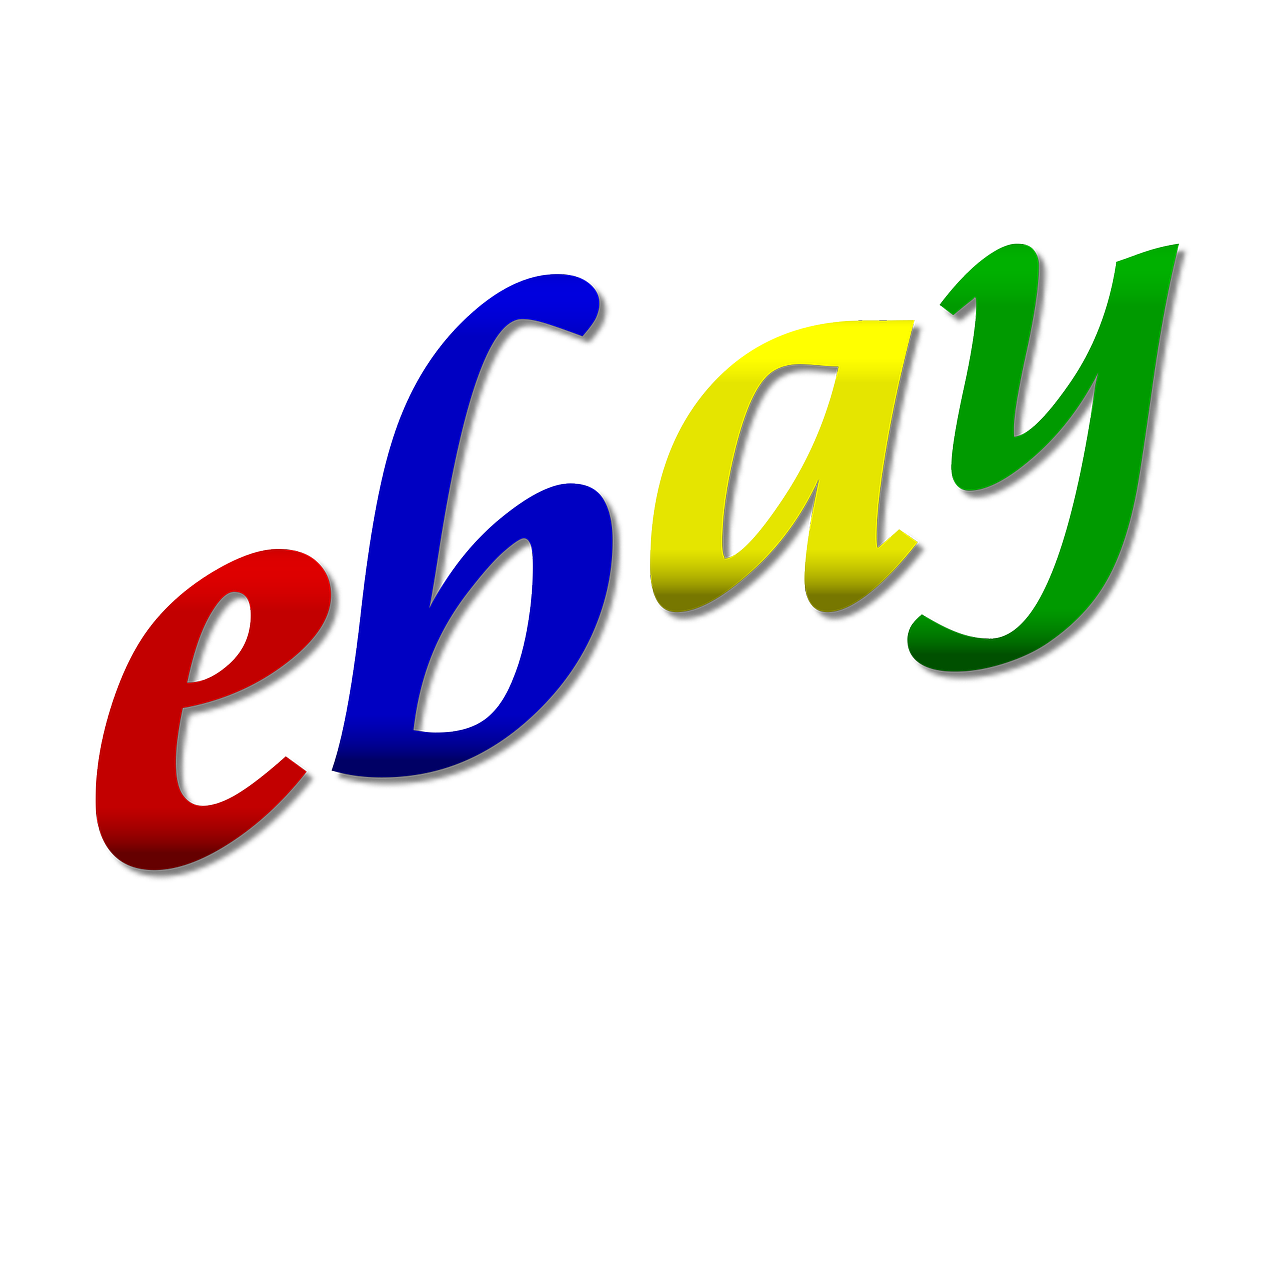 logo ebay website free photo